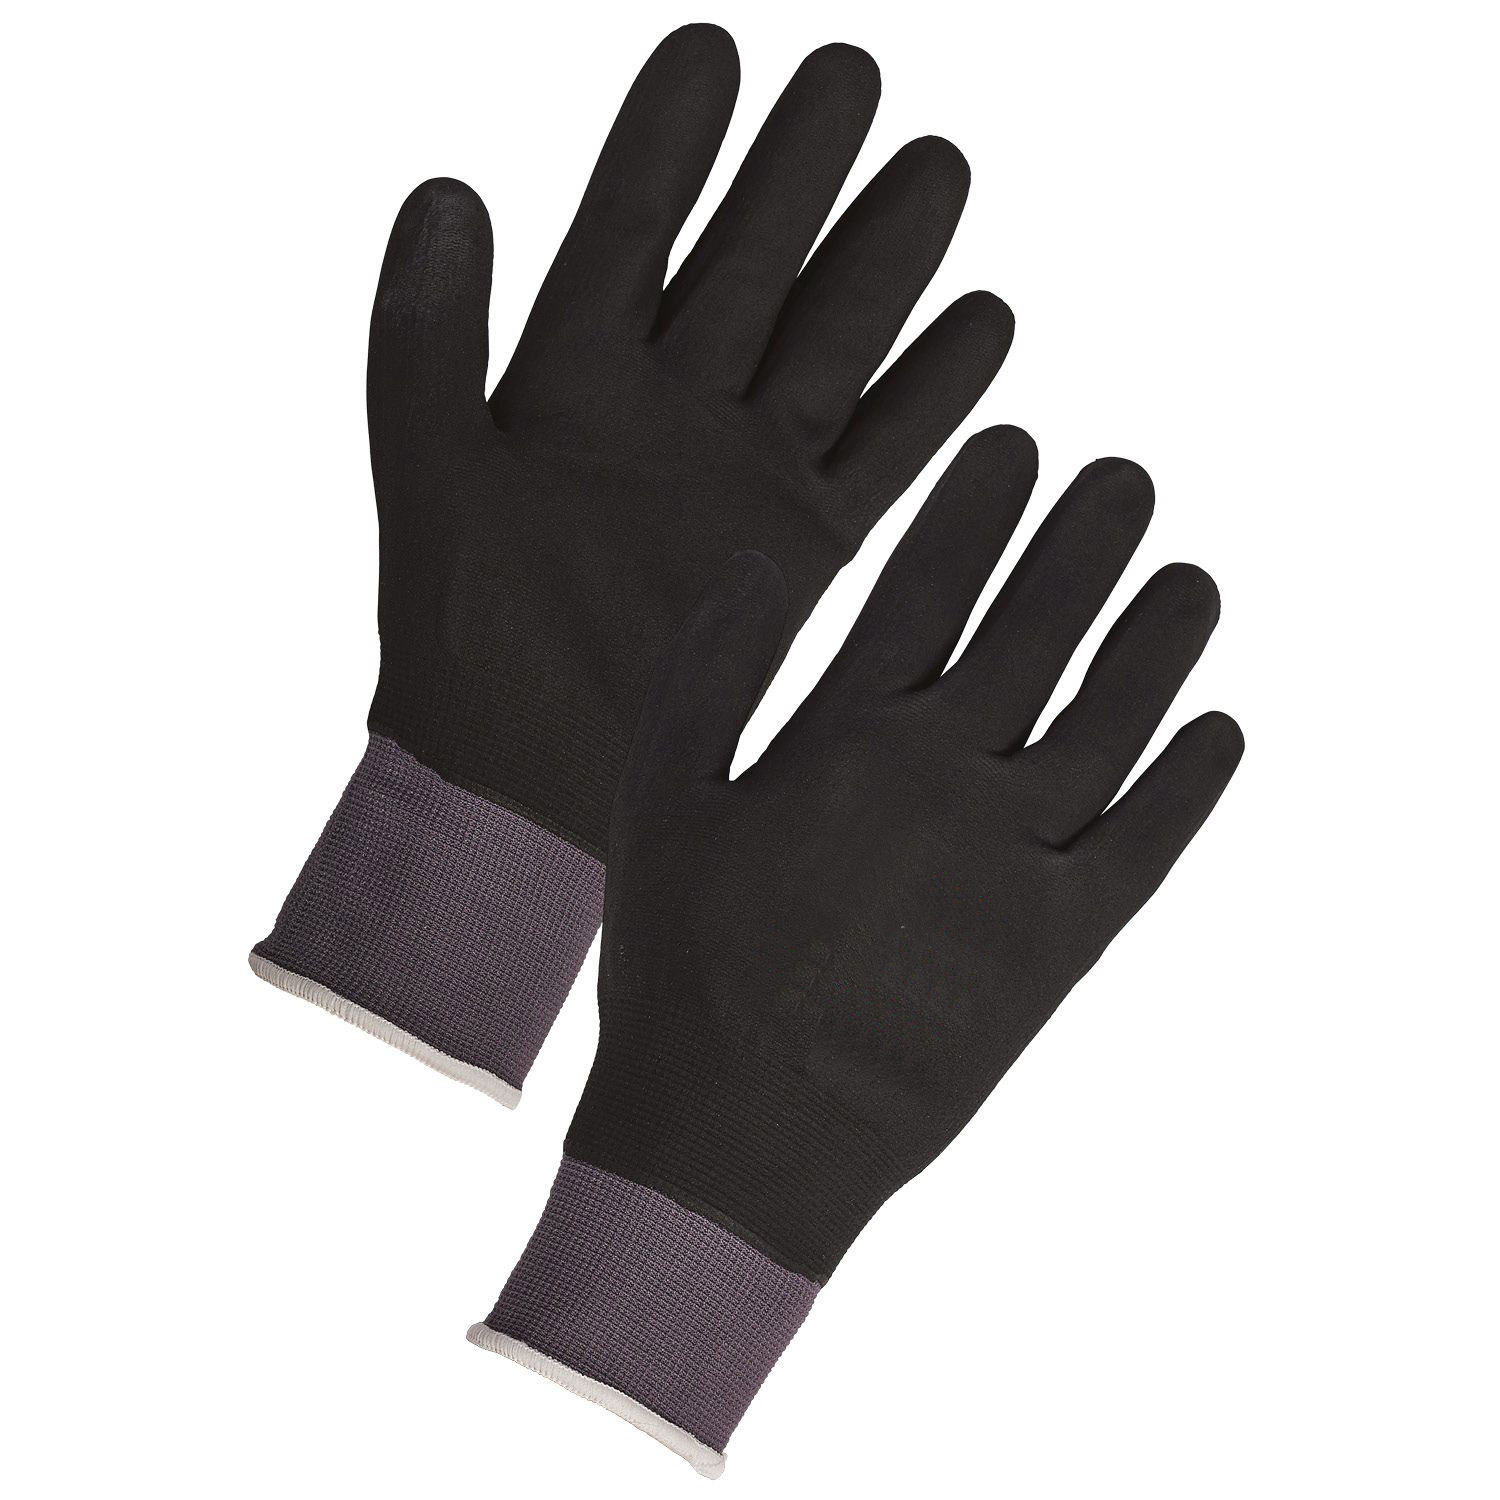 Nylon Flexible Moisture Breathable Glove with Nitrile Coating